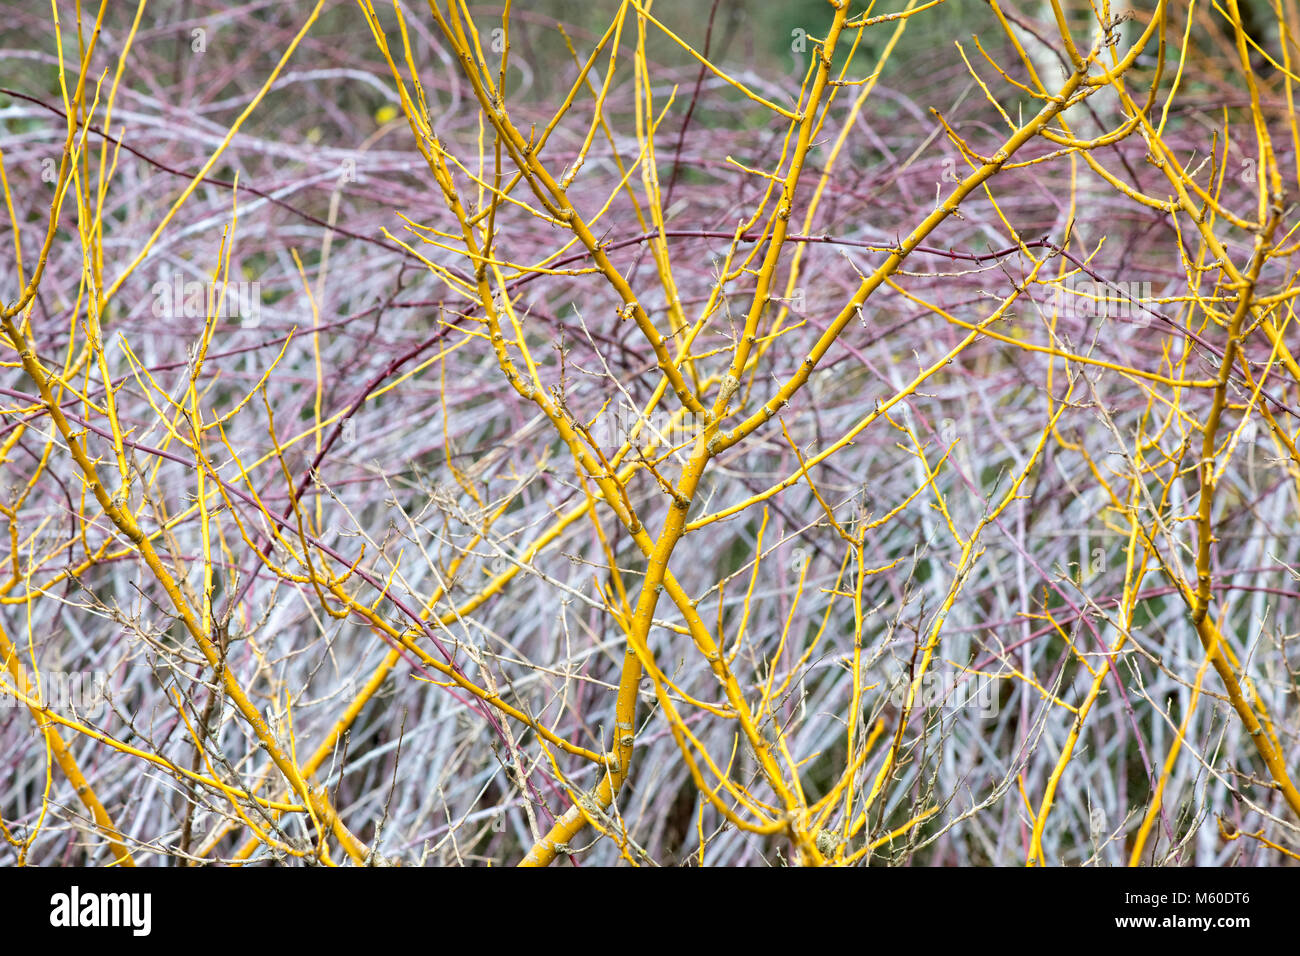 Styphnolobium japonicum Flaviraneum. Japanese pagoda tree stems in winter. England Stock Photo